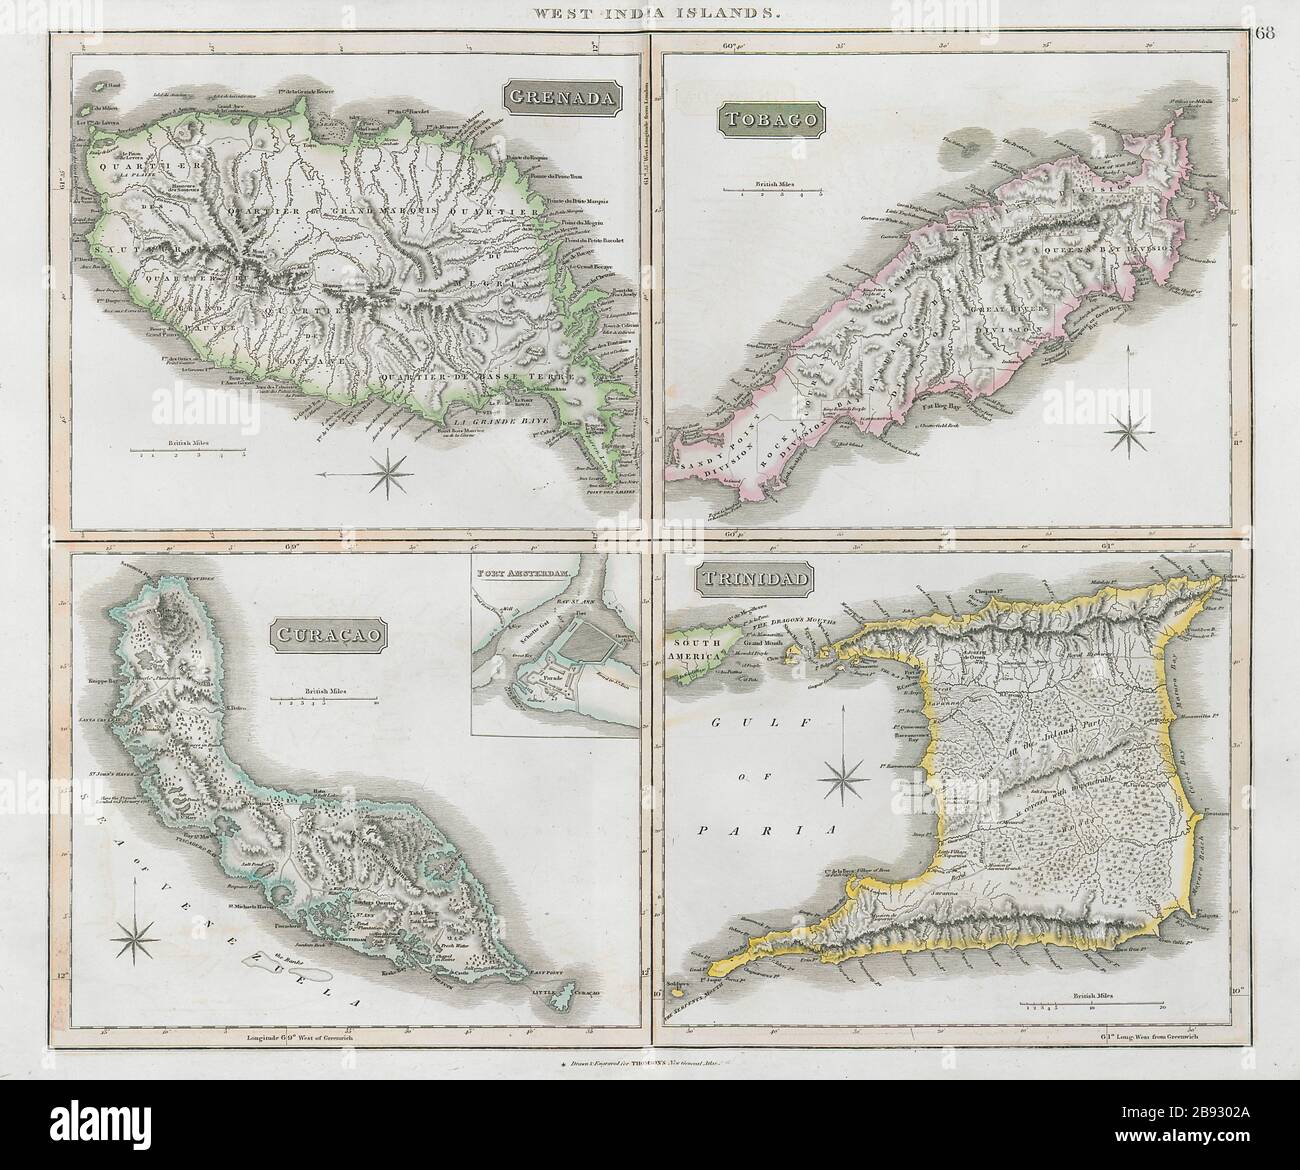 Grenada, Tobago, Trinidad & Curaçao. West Indies Caribbean. THOMSON 1830 map  Stock Photo - Alamy